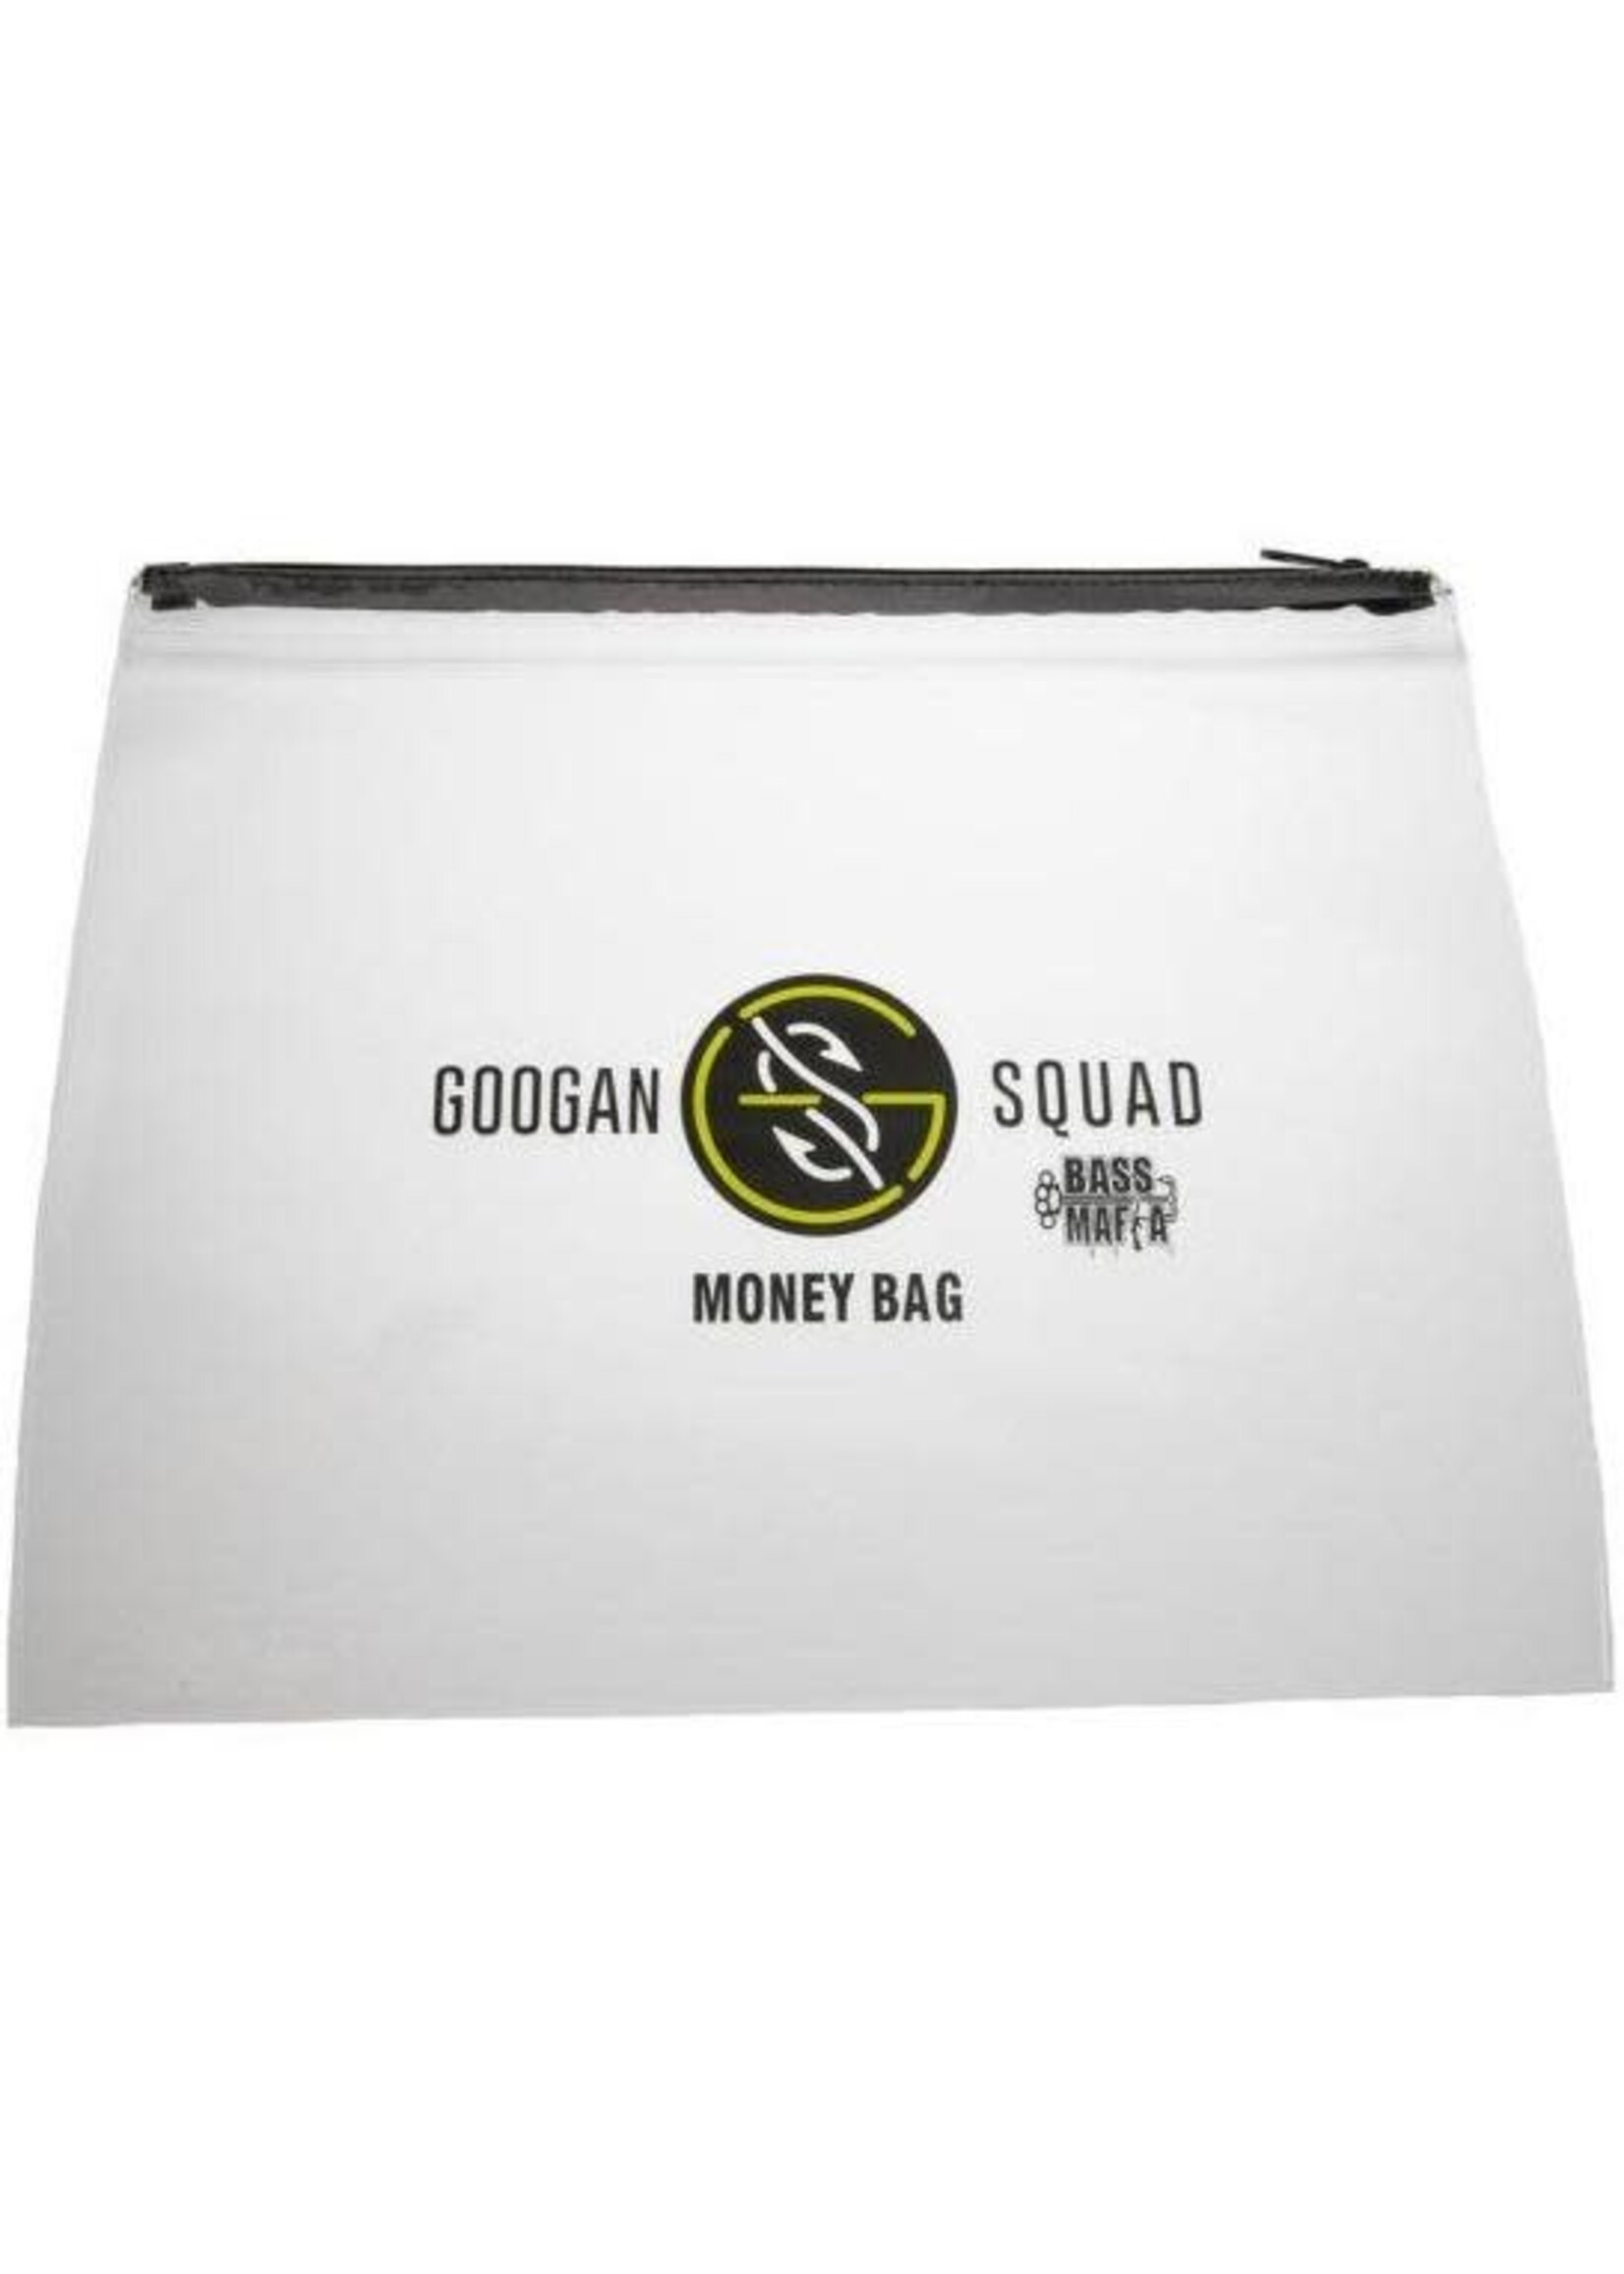 https://cdn.shoplightspeed.com/shops/626643/files/28841809/1652x2313x2/googan-baits-googan-squad-bass-mafia-money-bag.jpg